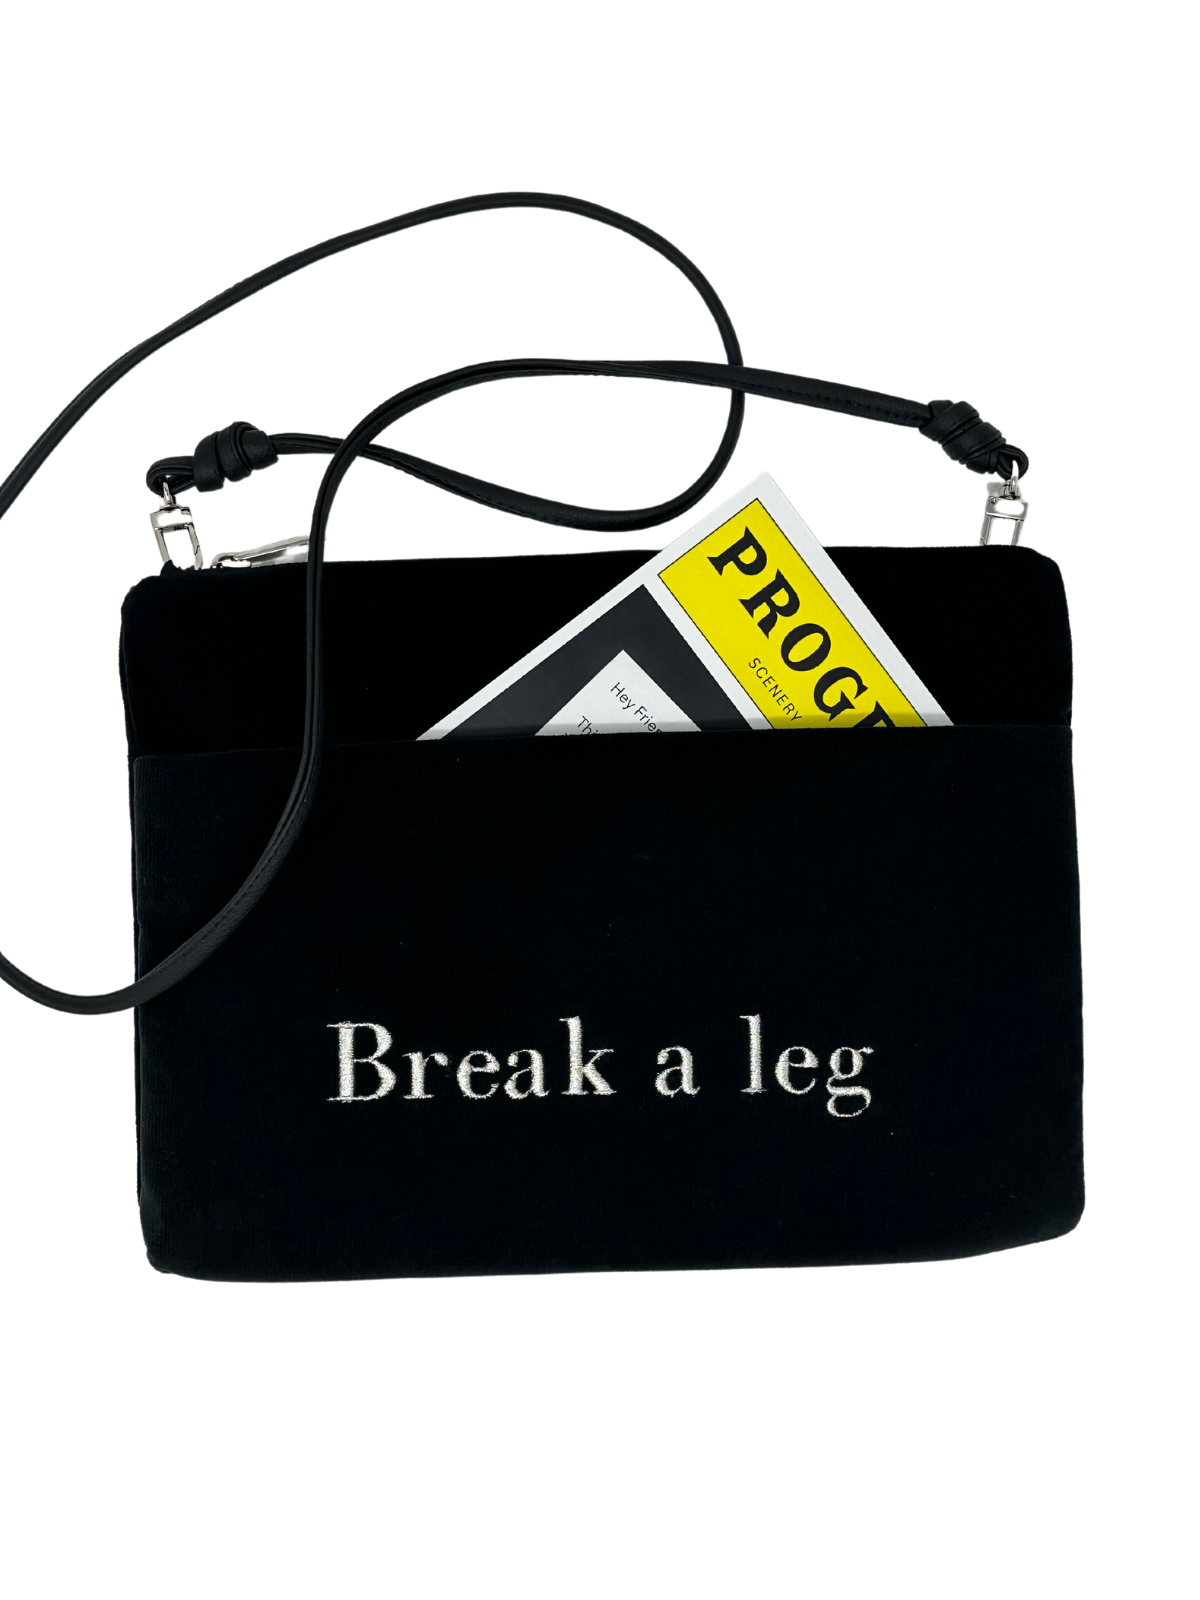 Silver "Break a leg" bag (with loops) - Scenery